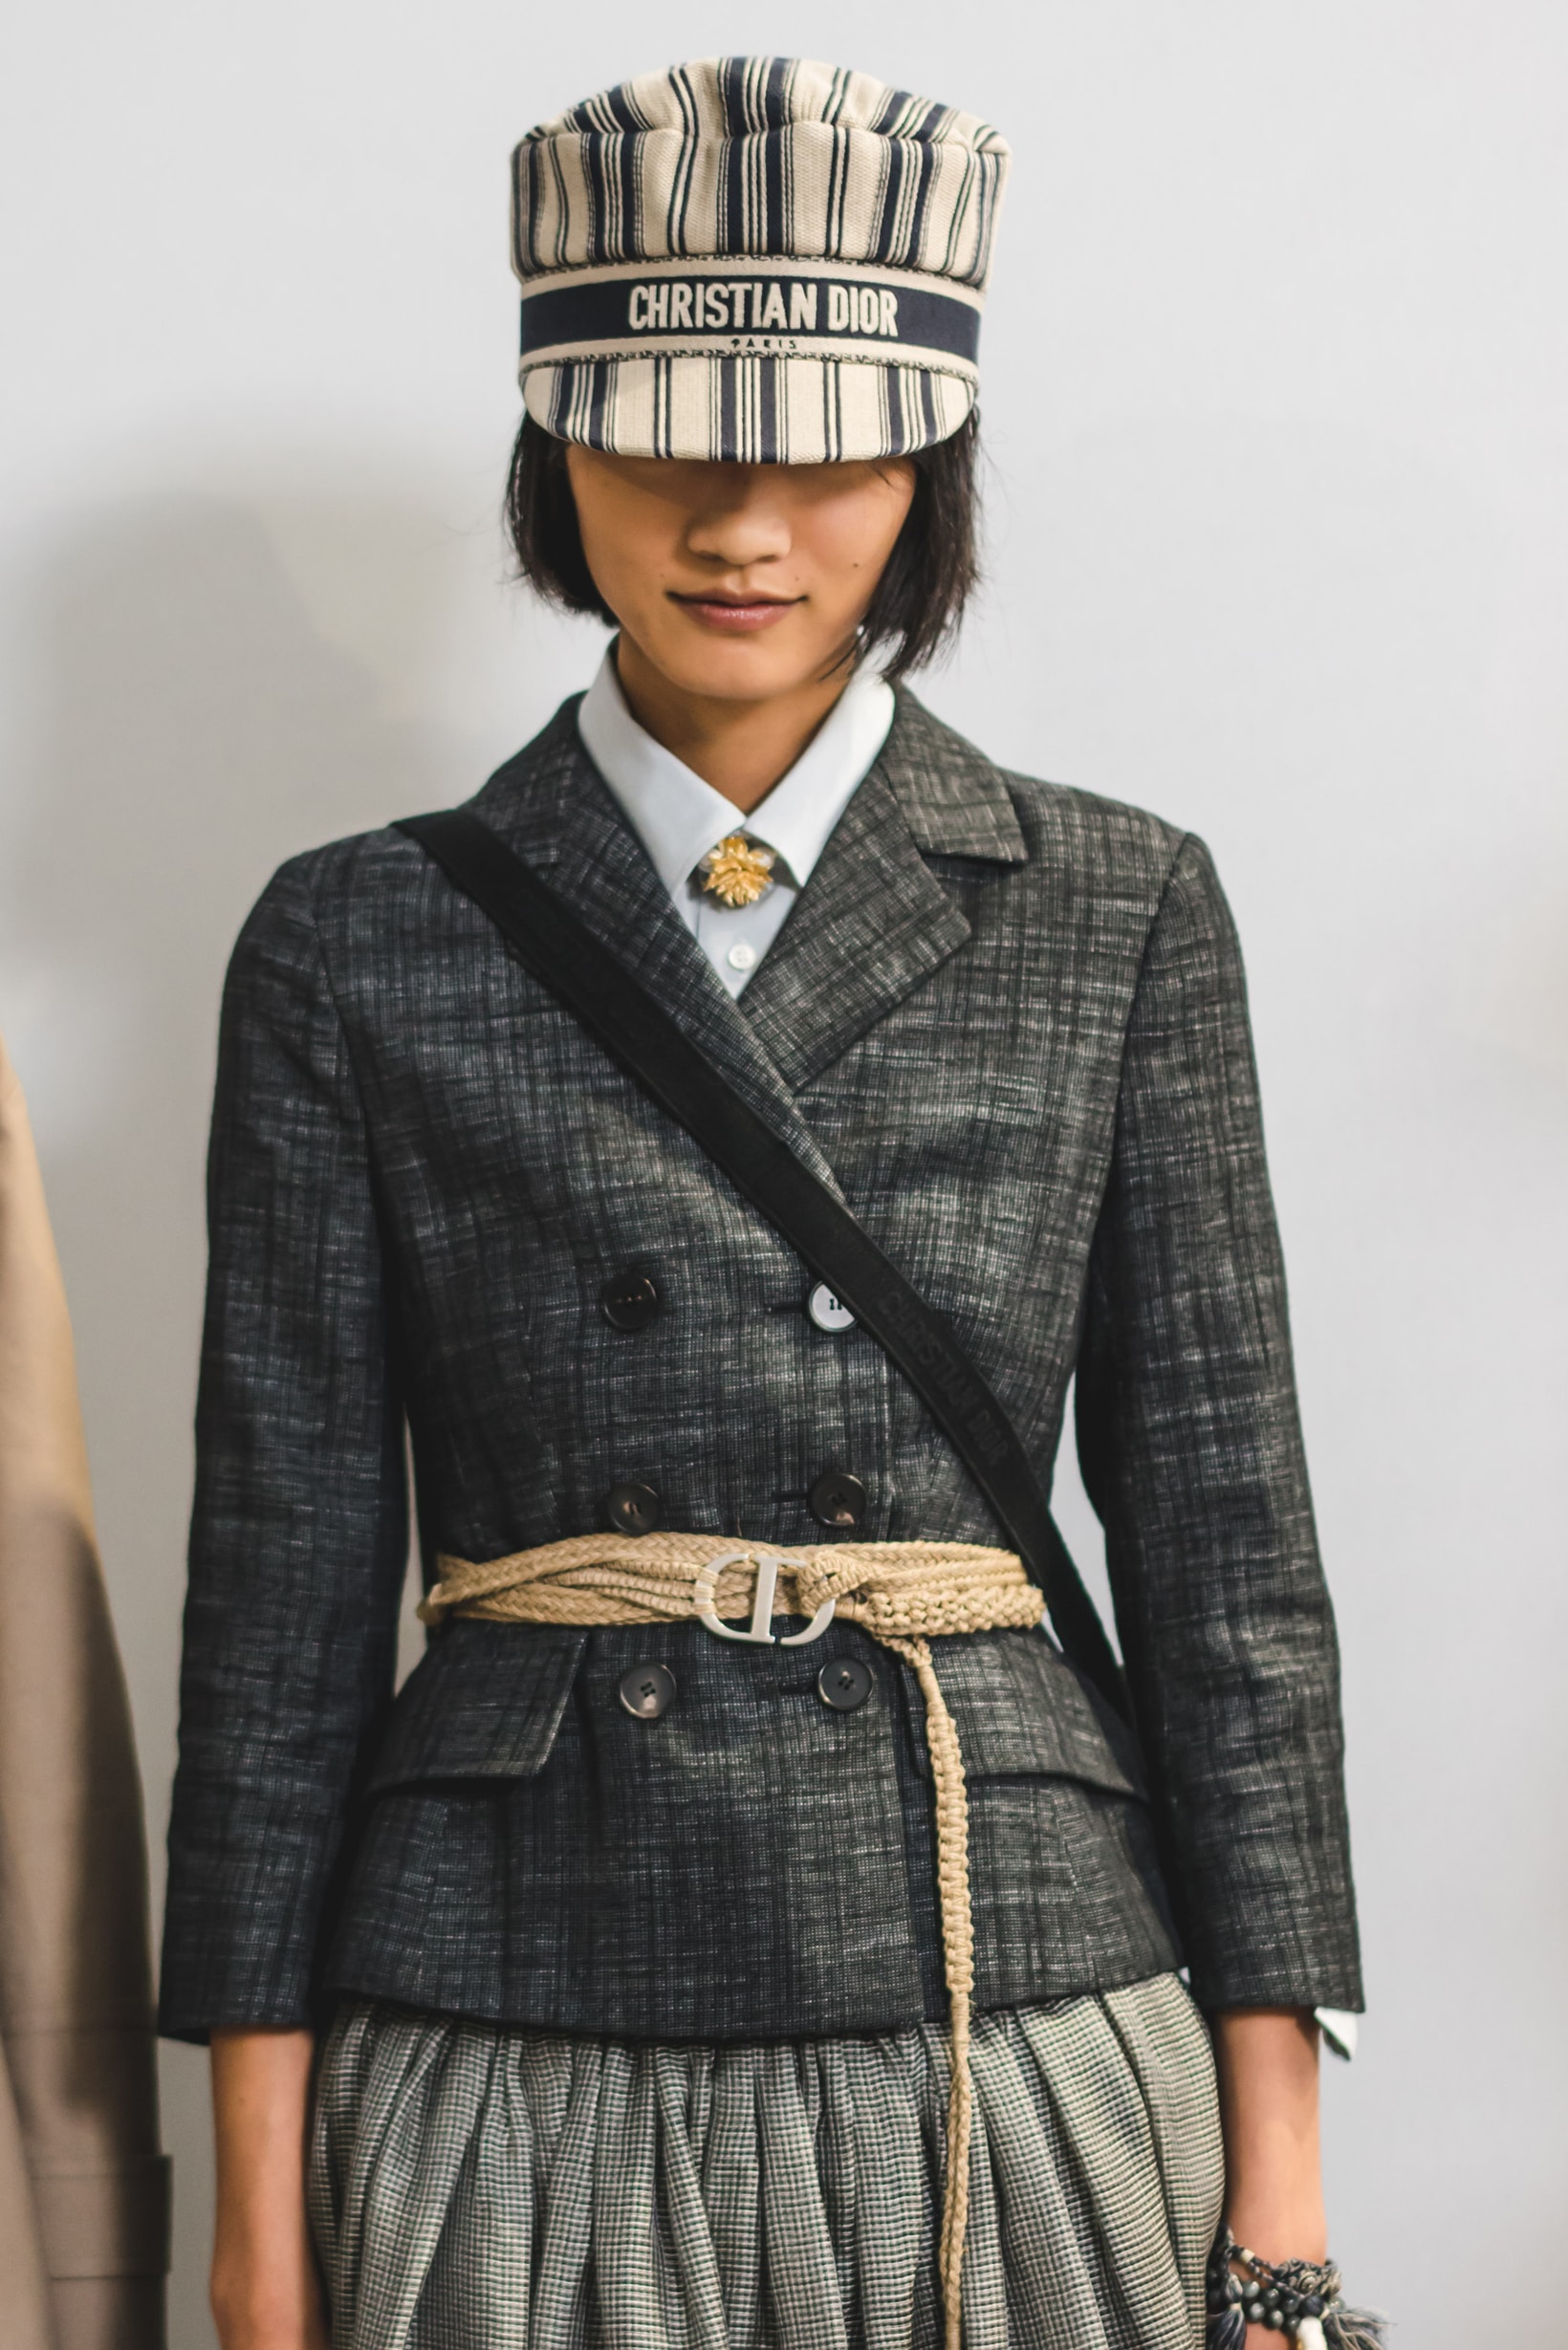 Dior Spring Summer 2020 Paris Fashion Week Collection Show Backstage Look Jacket Black Hat Tan